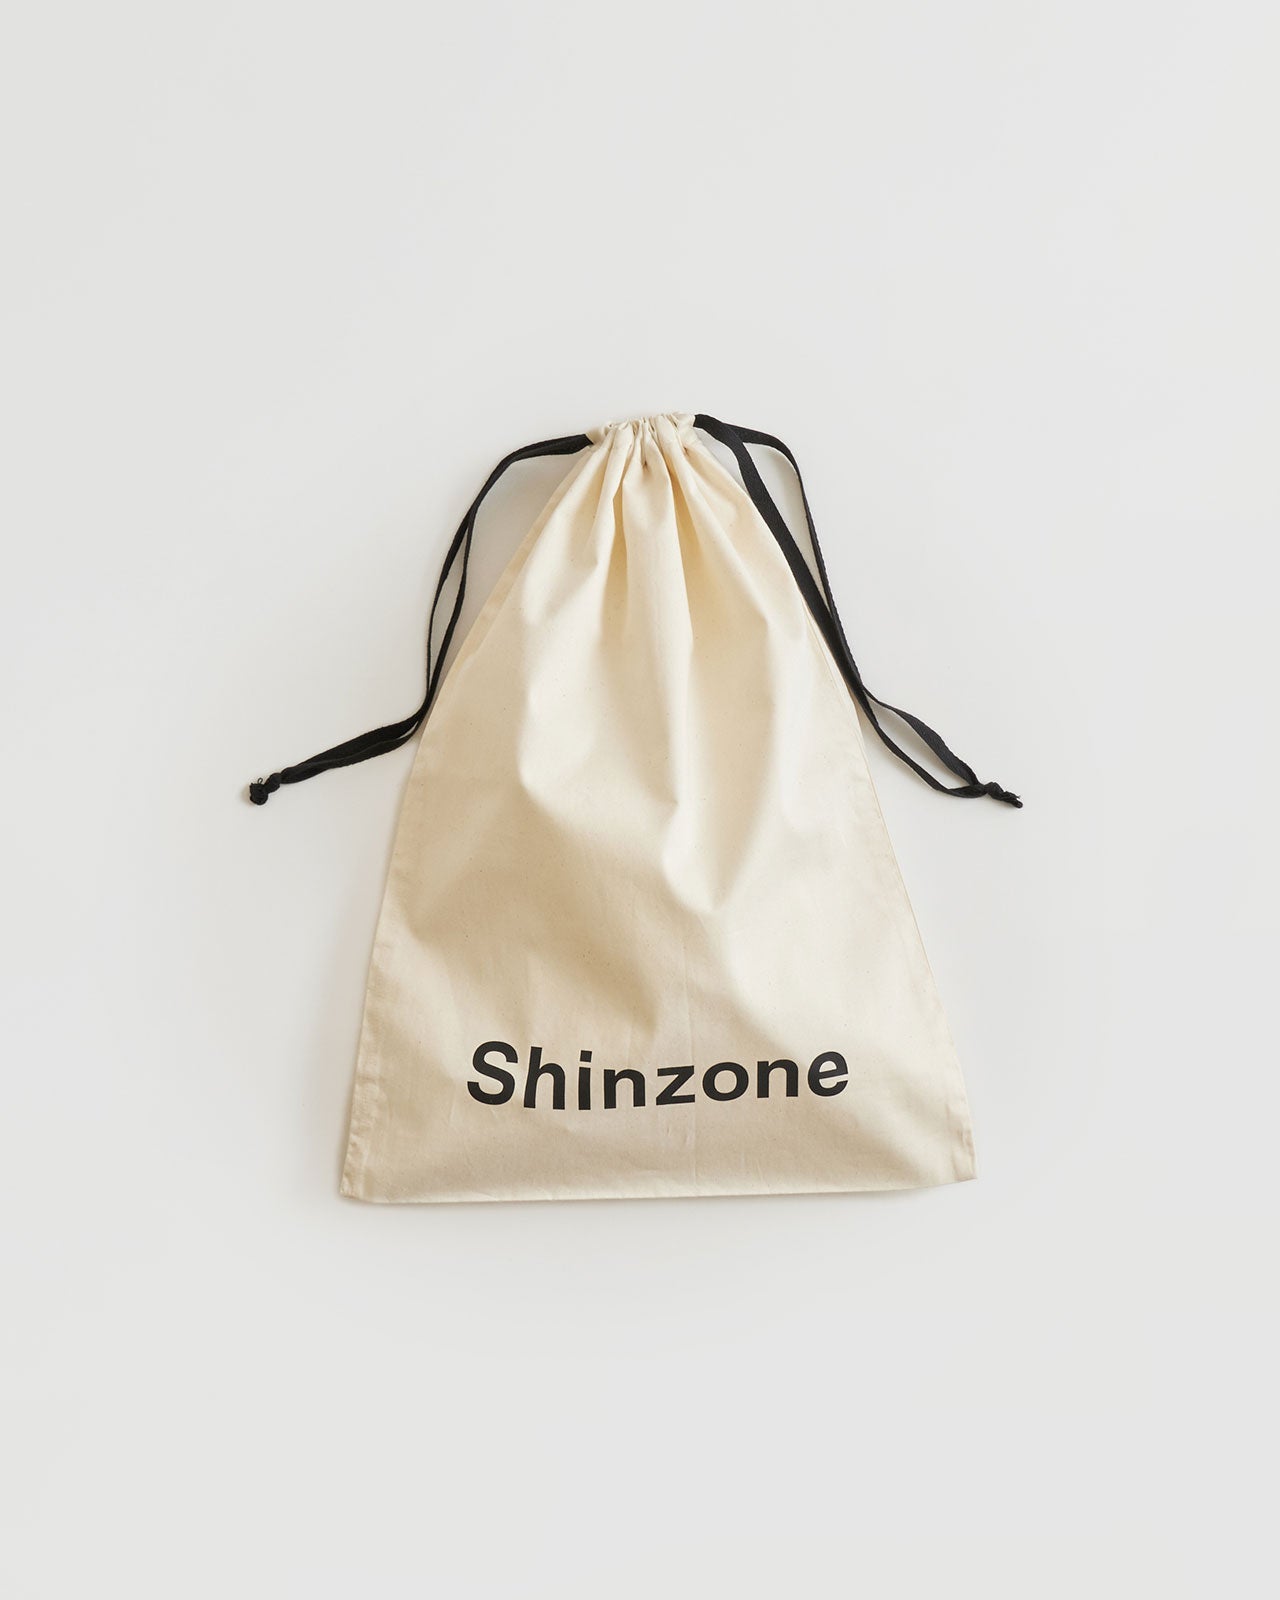 LAVER HEART SIGNET RING – Shinzone